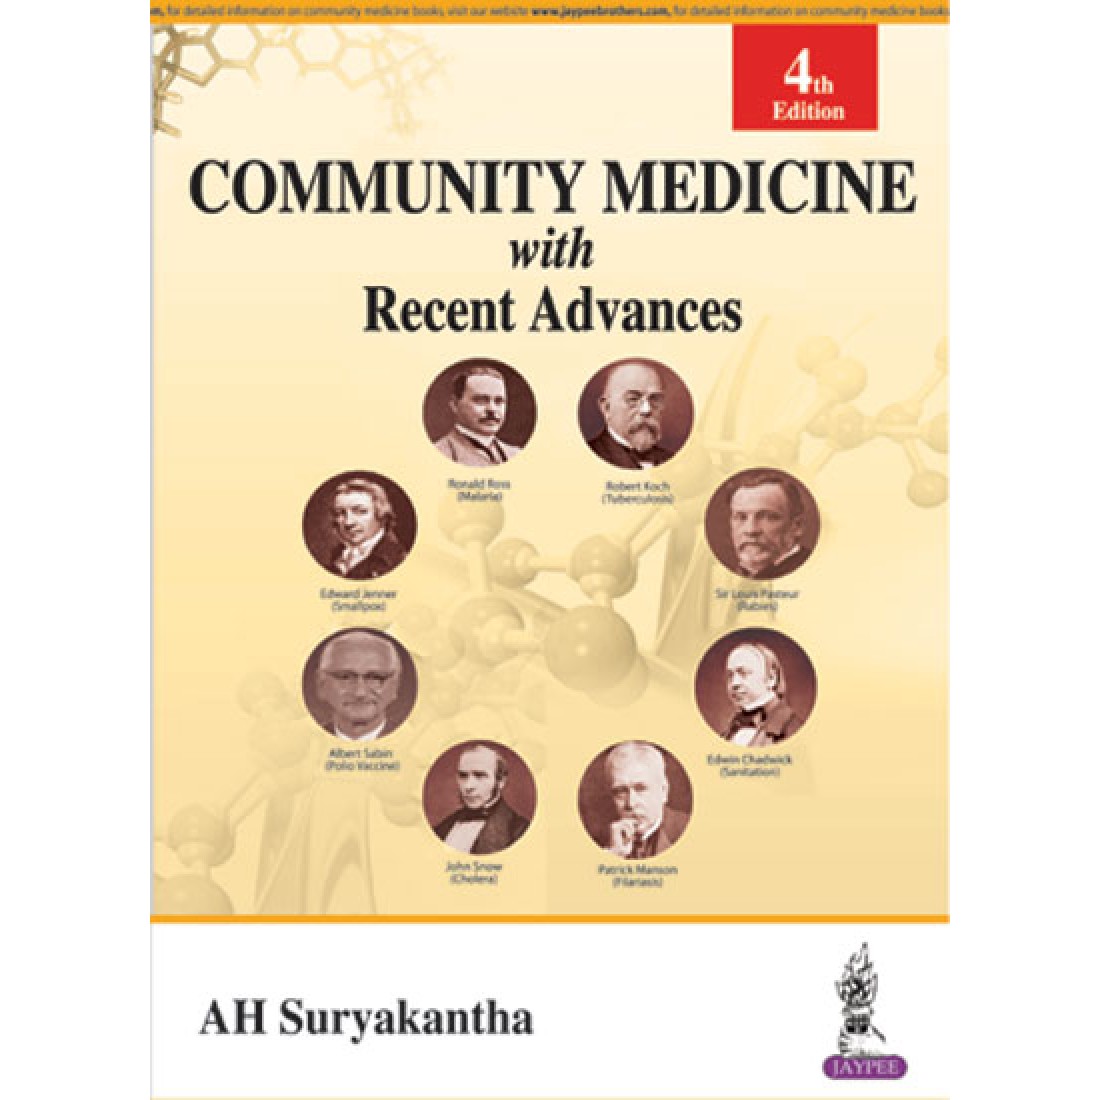 community medicine research topics for undergraduates in pakistan